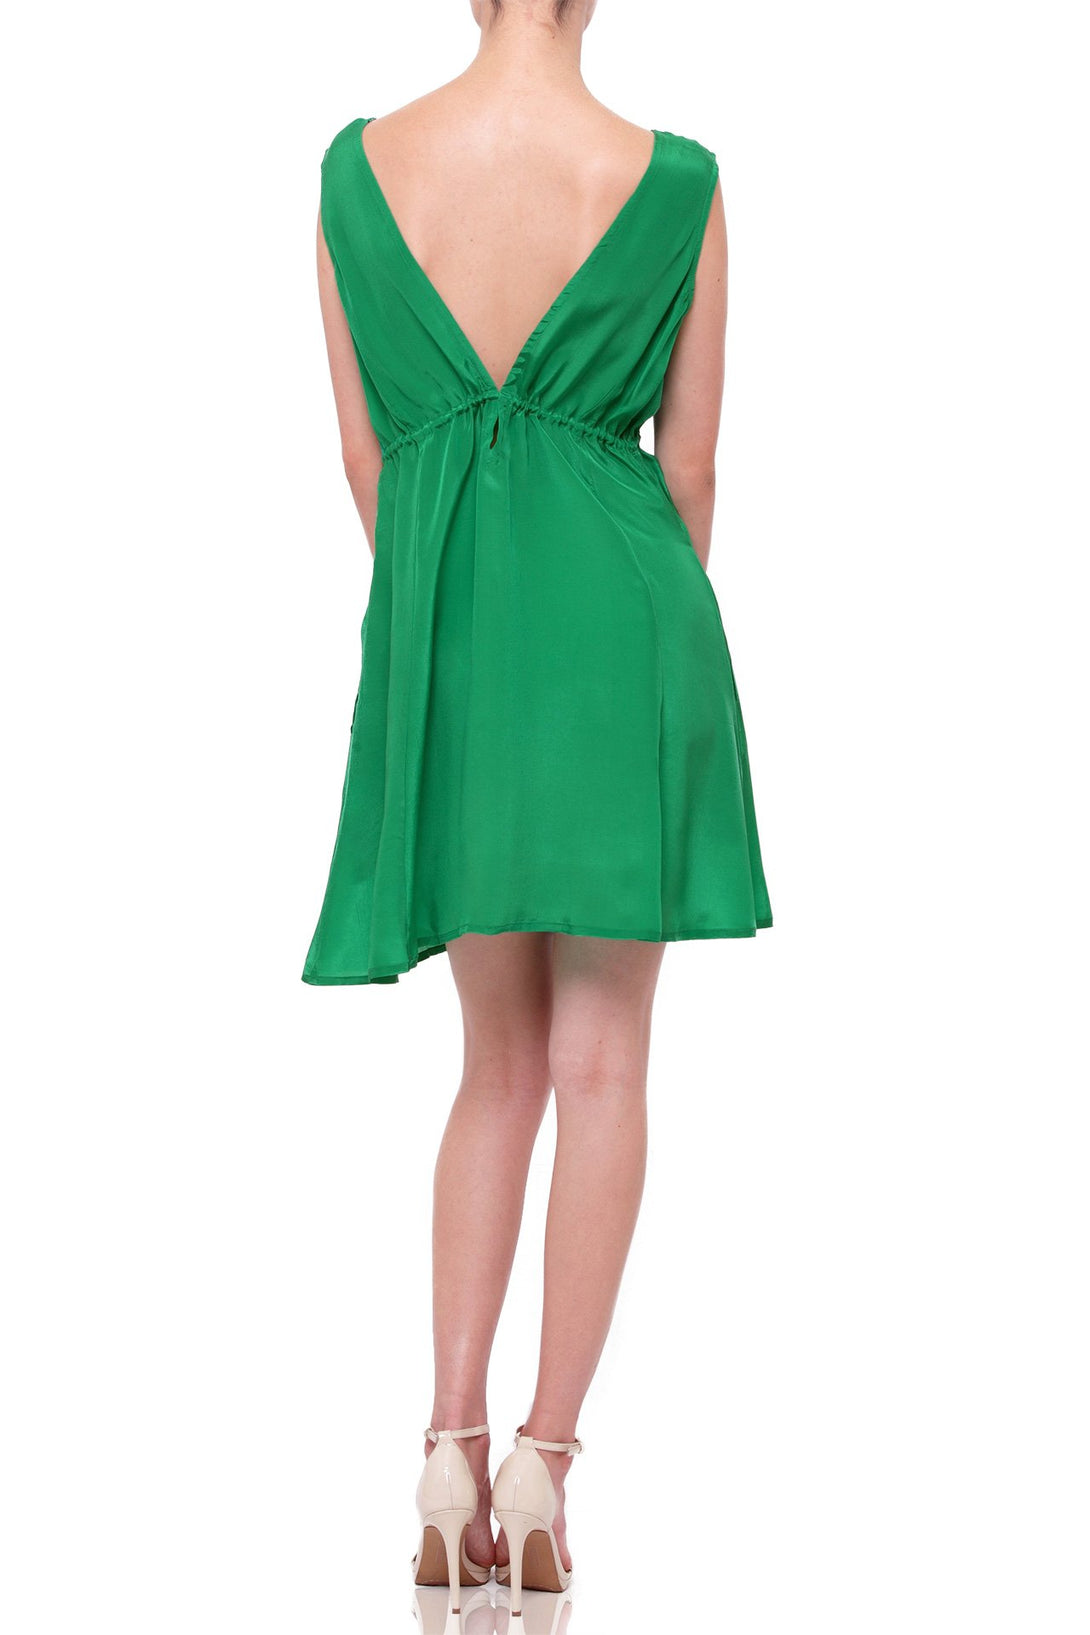  green short dress,  short sleeveless summer dresses,Shahida Parides, mini frock for women,